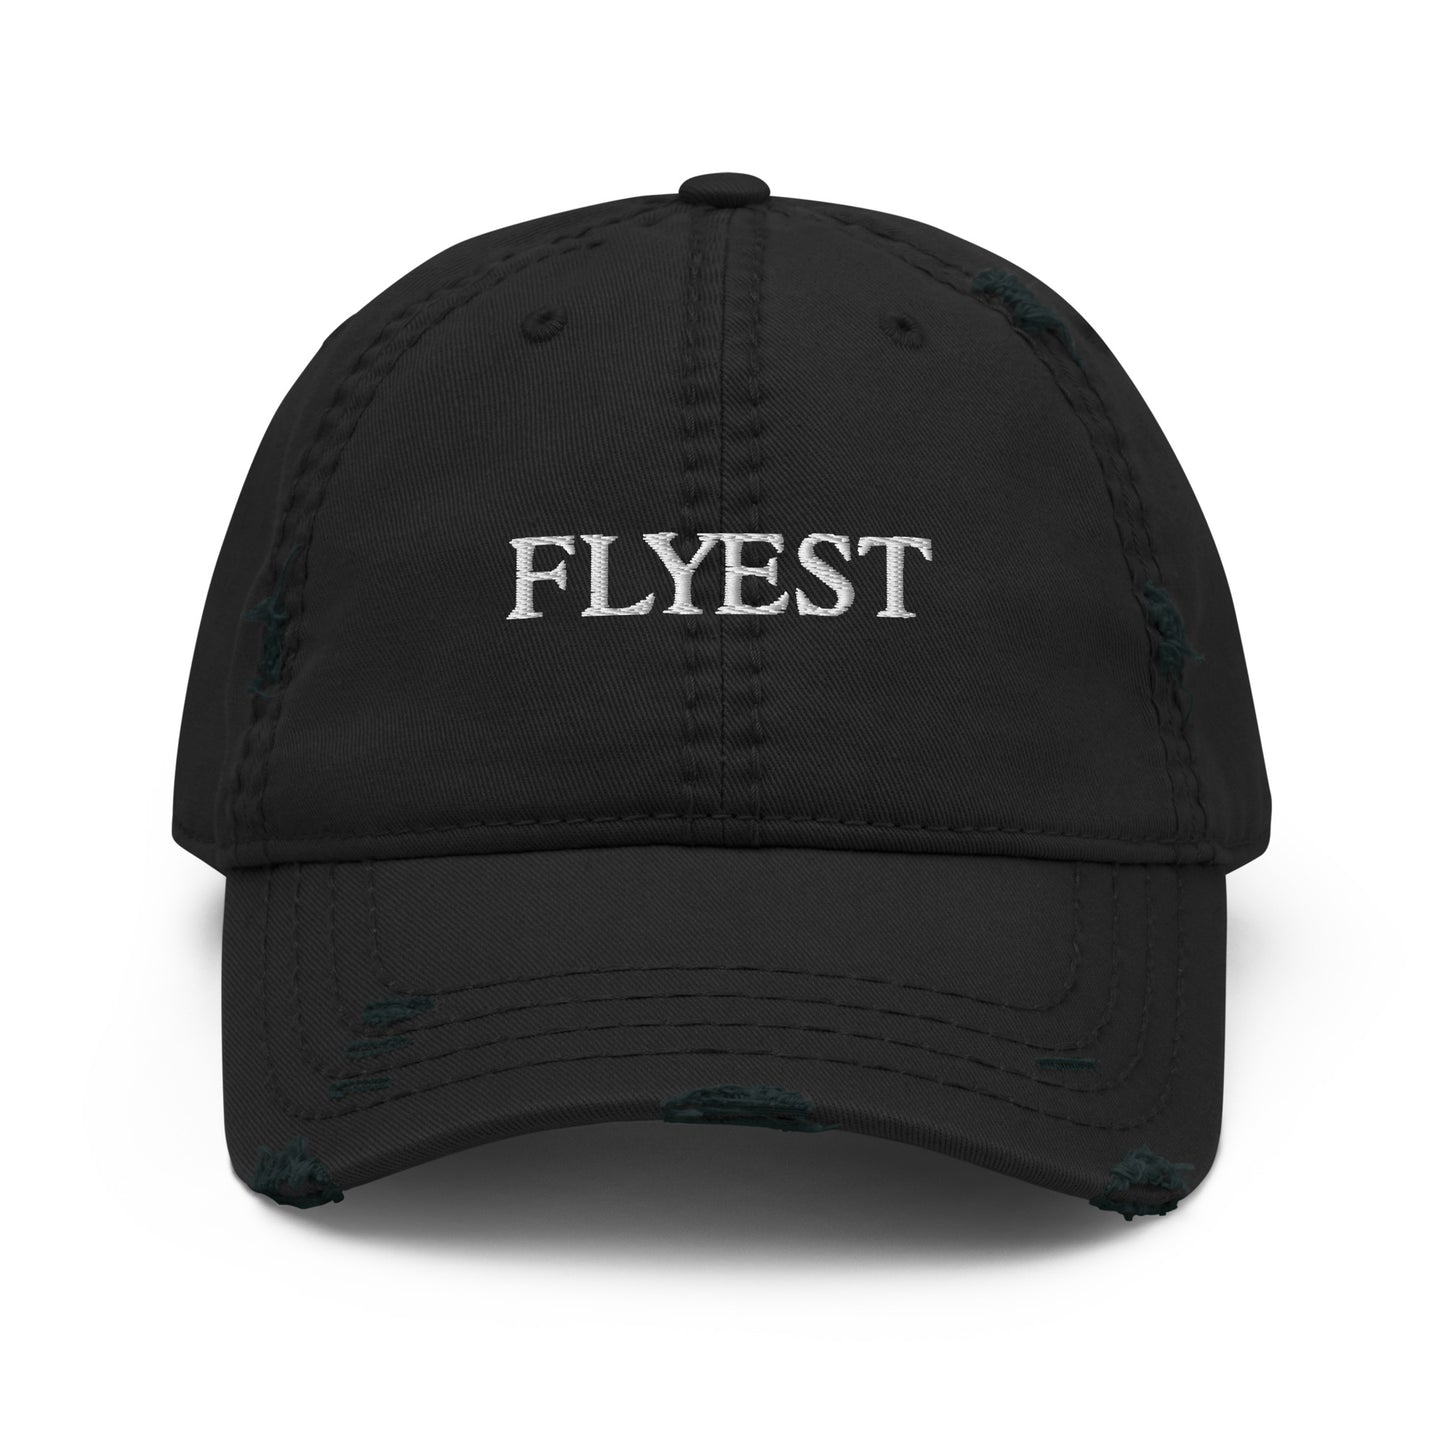 Flyest Distressed Cap